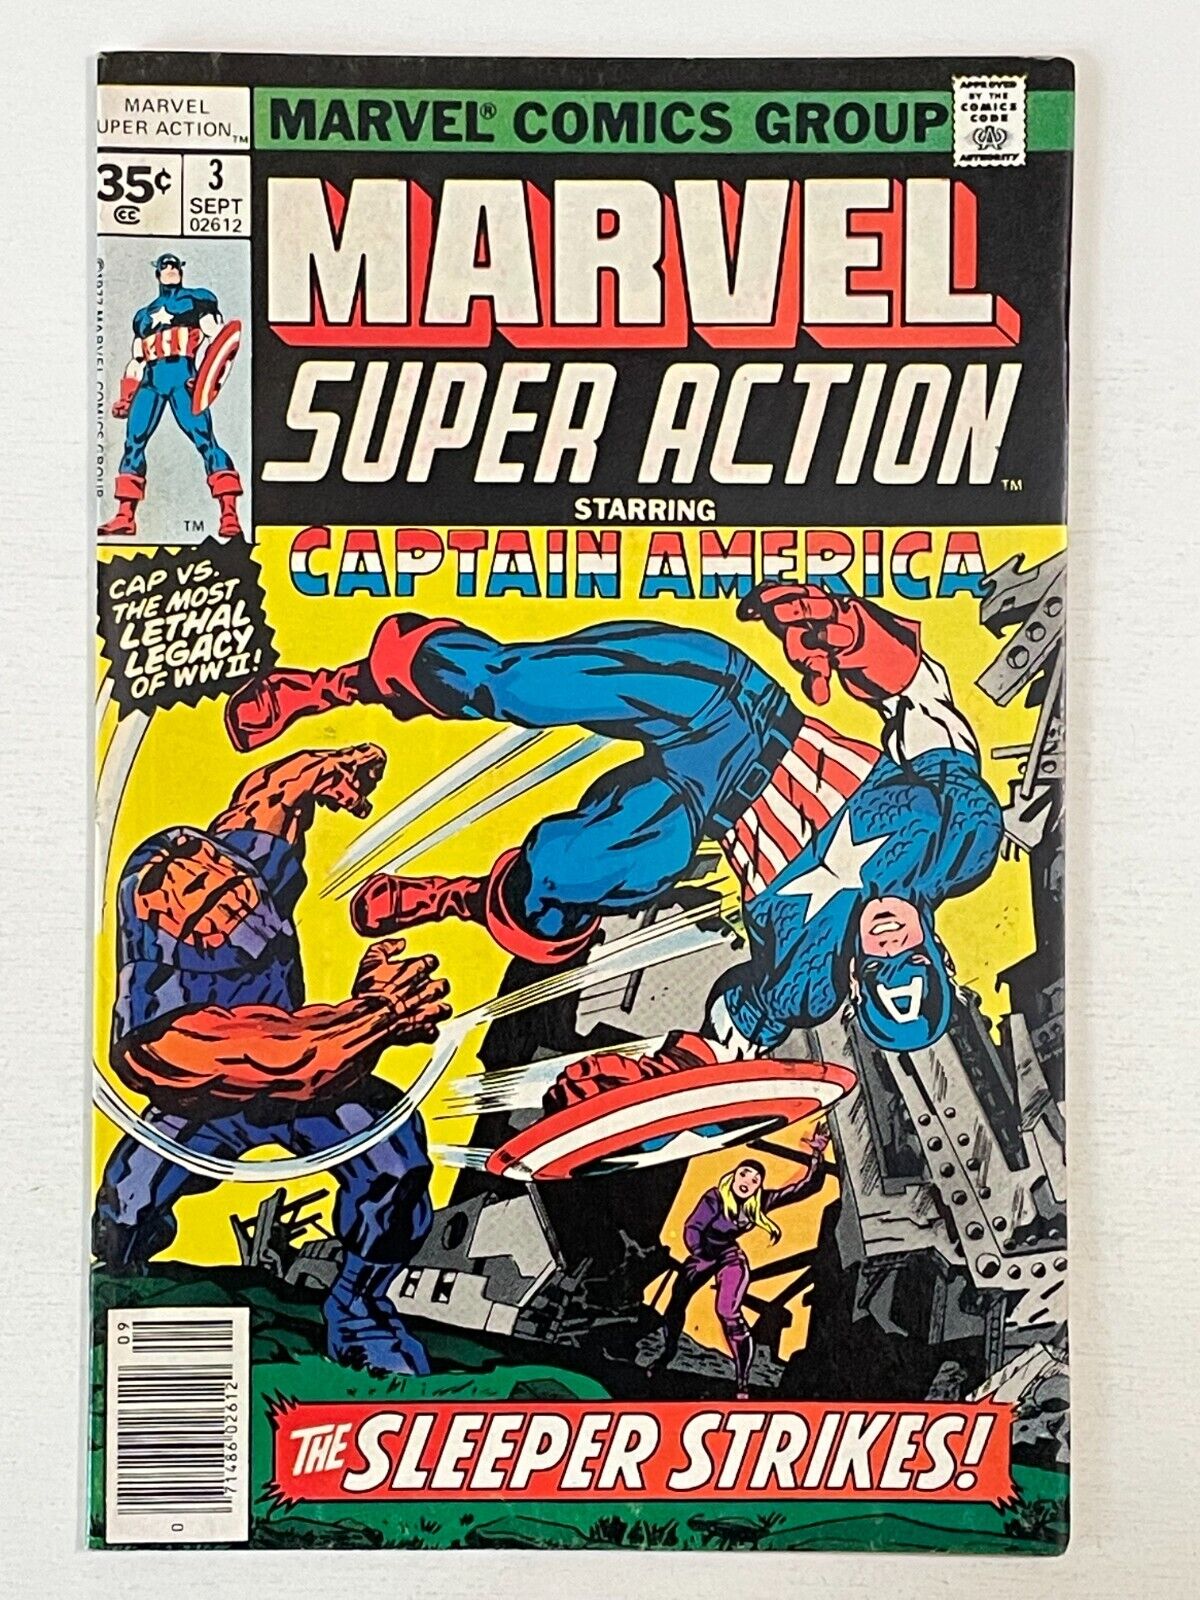 MARVEL SUPER ACTION COMICS #3 CAPTAIN AMERICA JACK KIRBY 35 CENT VARIANT FN 1977